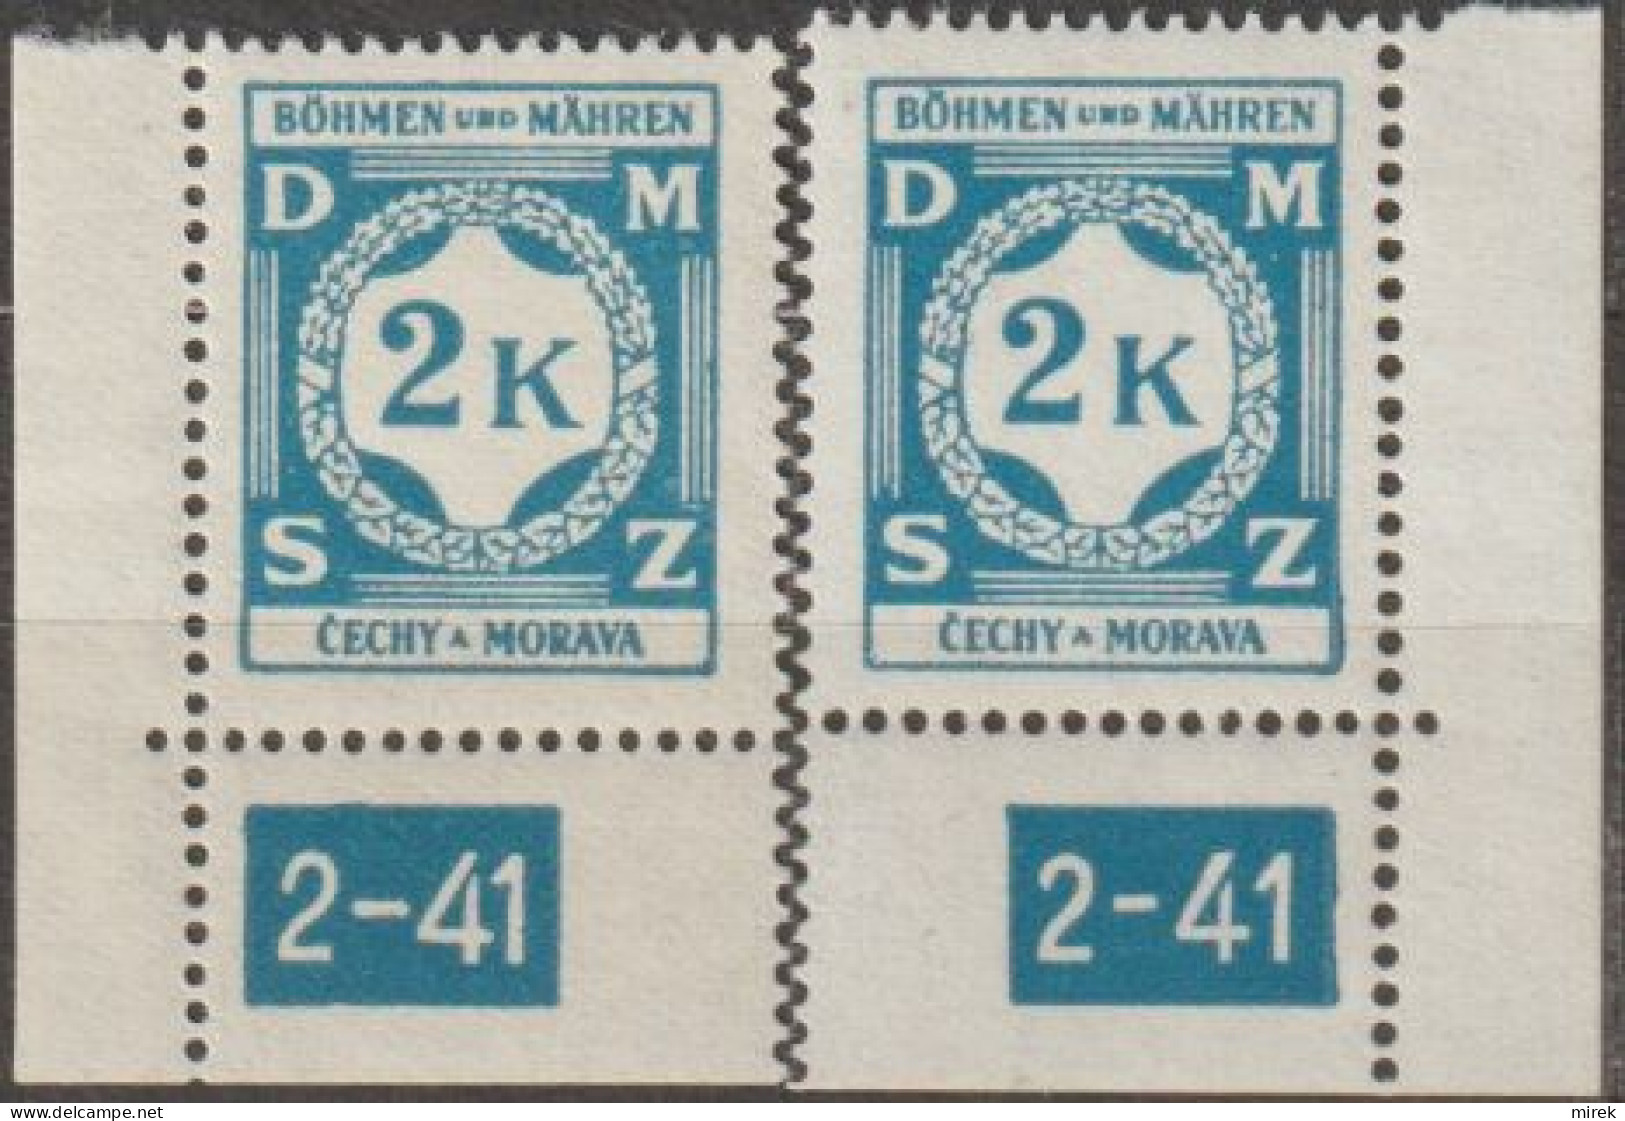 32/ Pof. SL 9, Corner Stamps, Plate Number 2-41 - Neufs